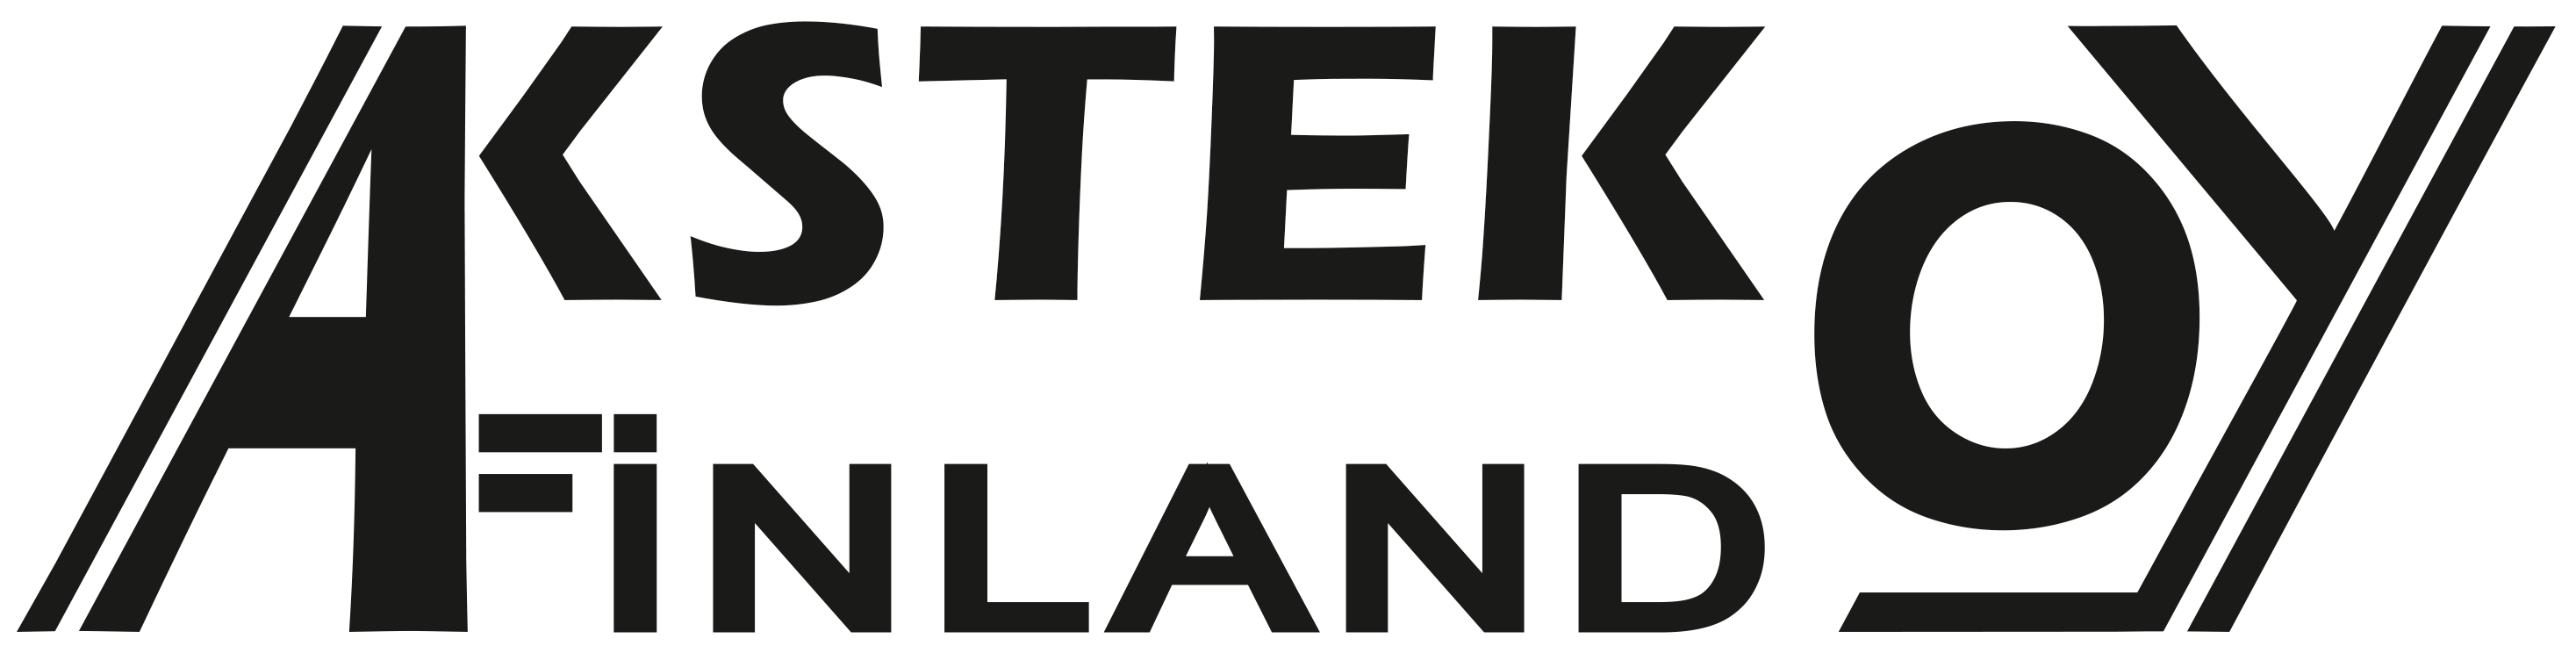 AksTek Finland oy logo